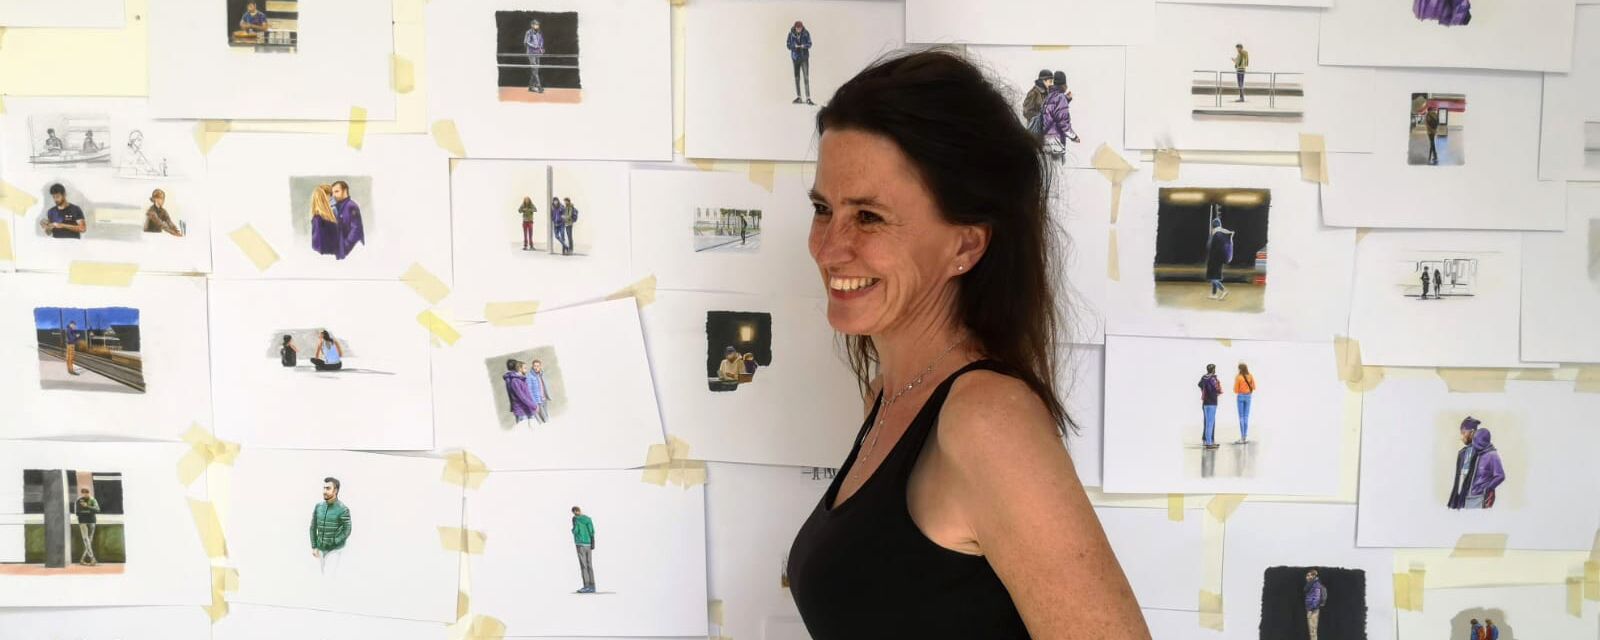 Kim Reuter, Atelier 2020